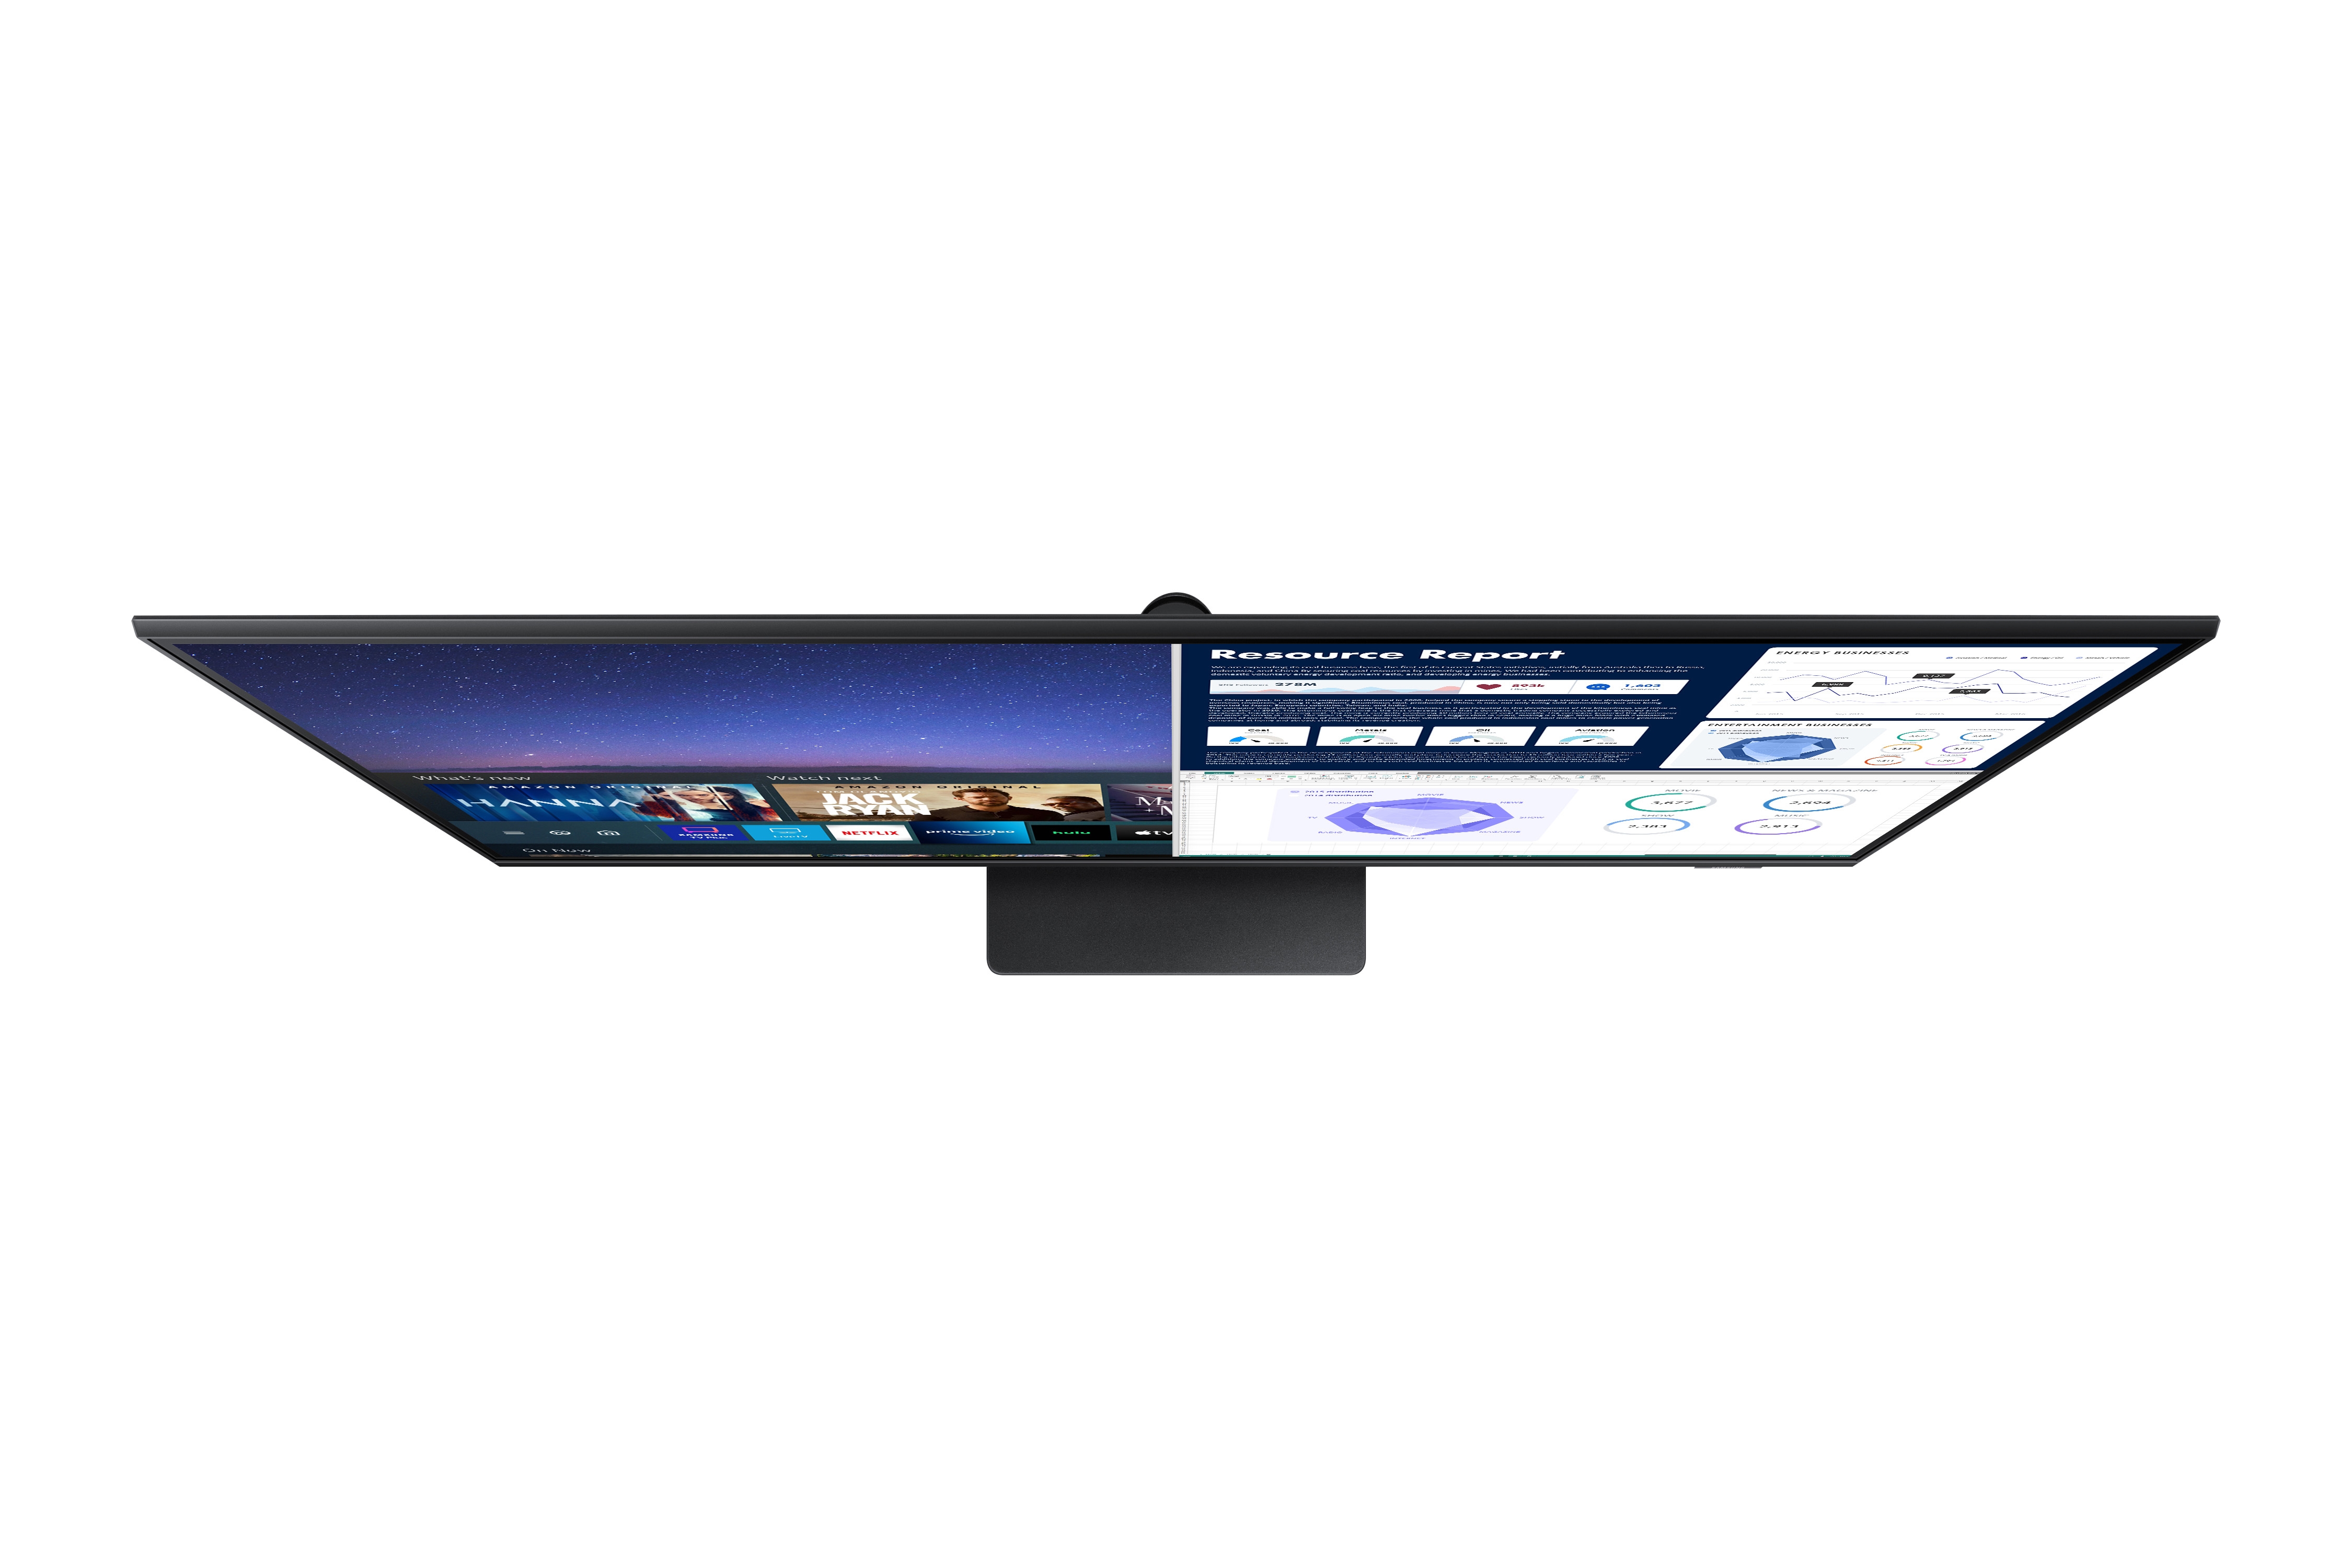 Samsung 43 LED - Smart Monitor M7 S43BM700UP - Ecran PC